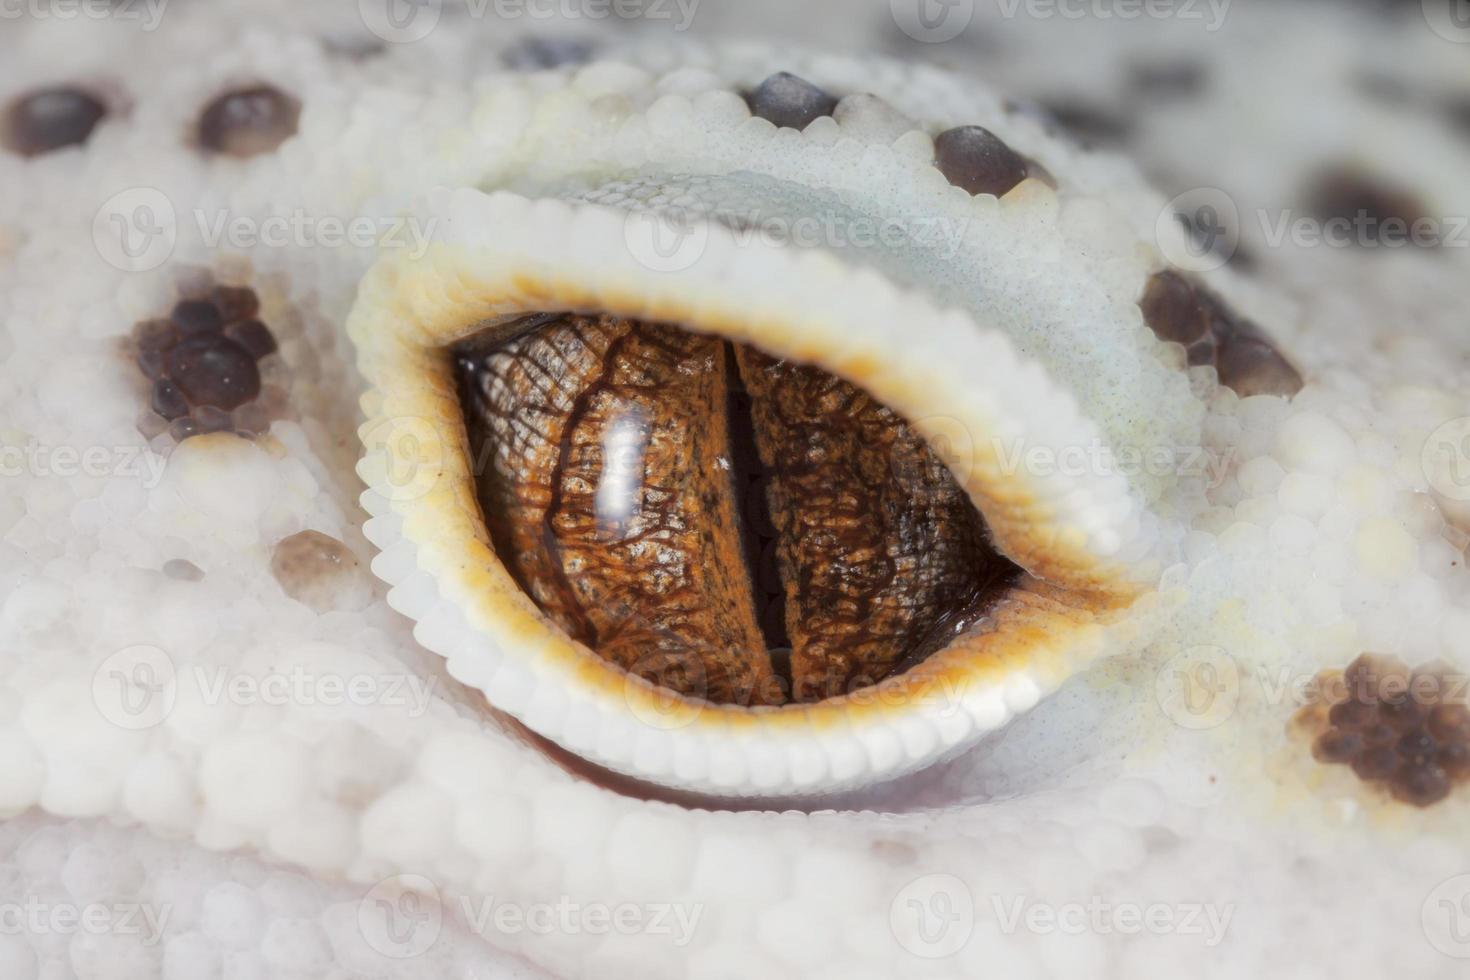 Gecko eye photo